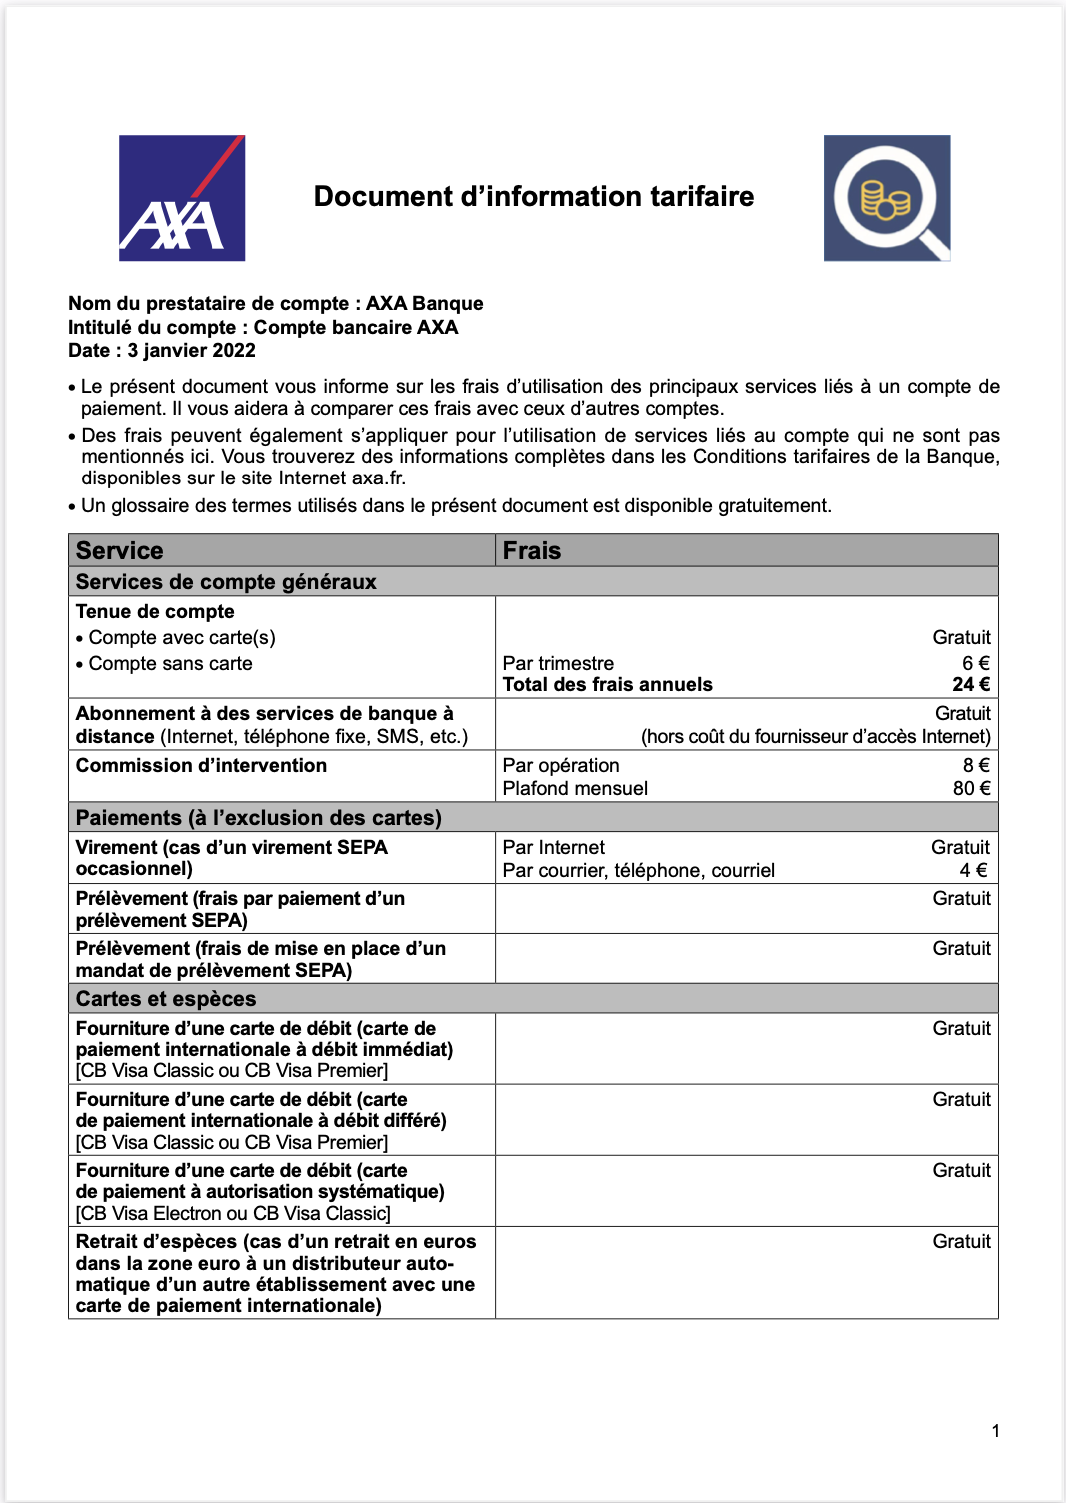 Doc informations tarifaires Axa Banque